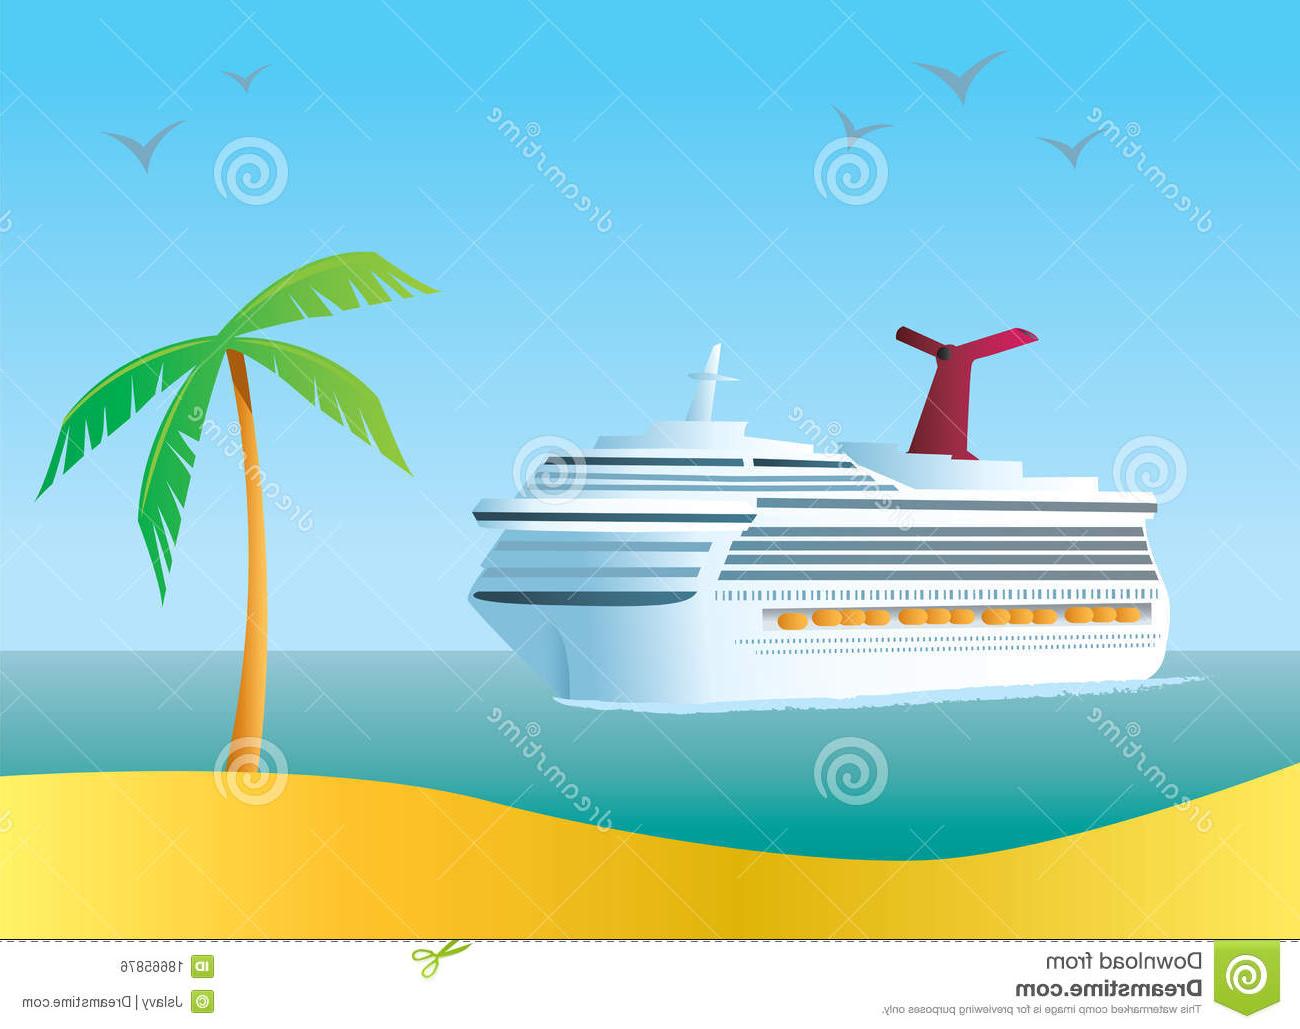 cruise clipart tropical cruise